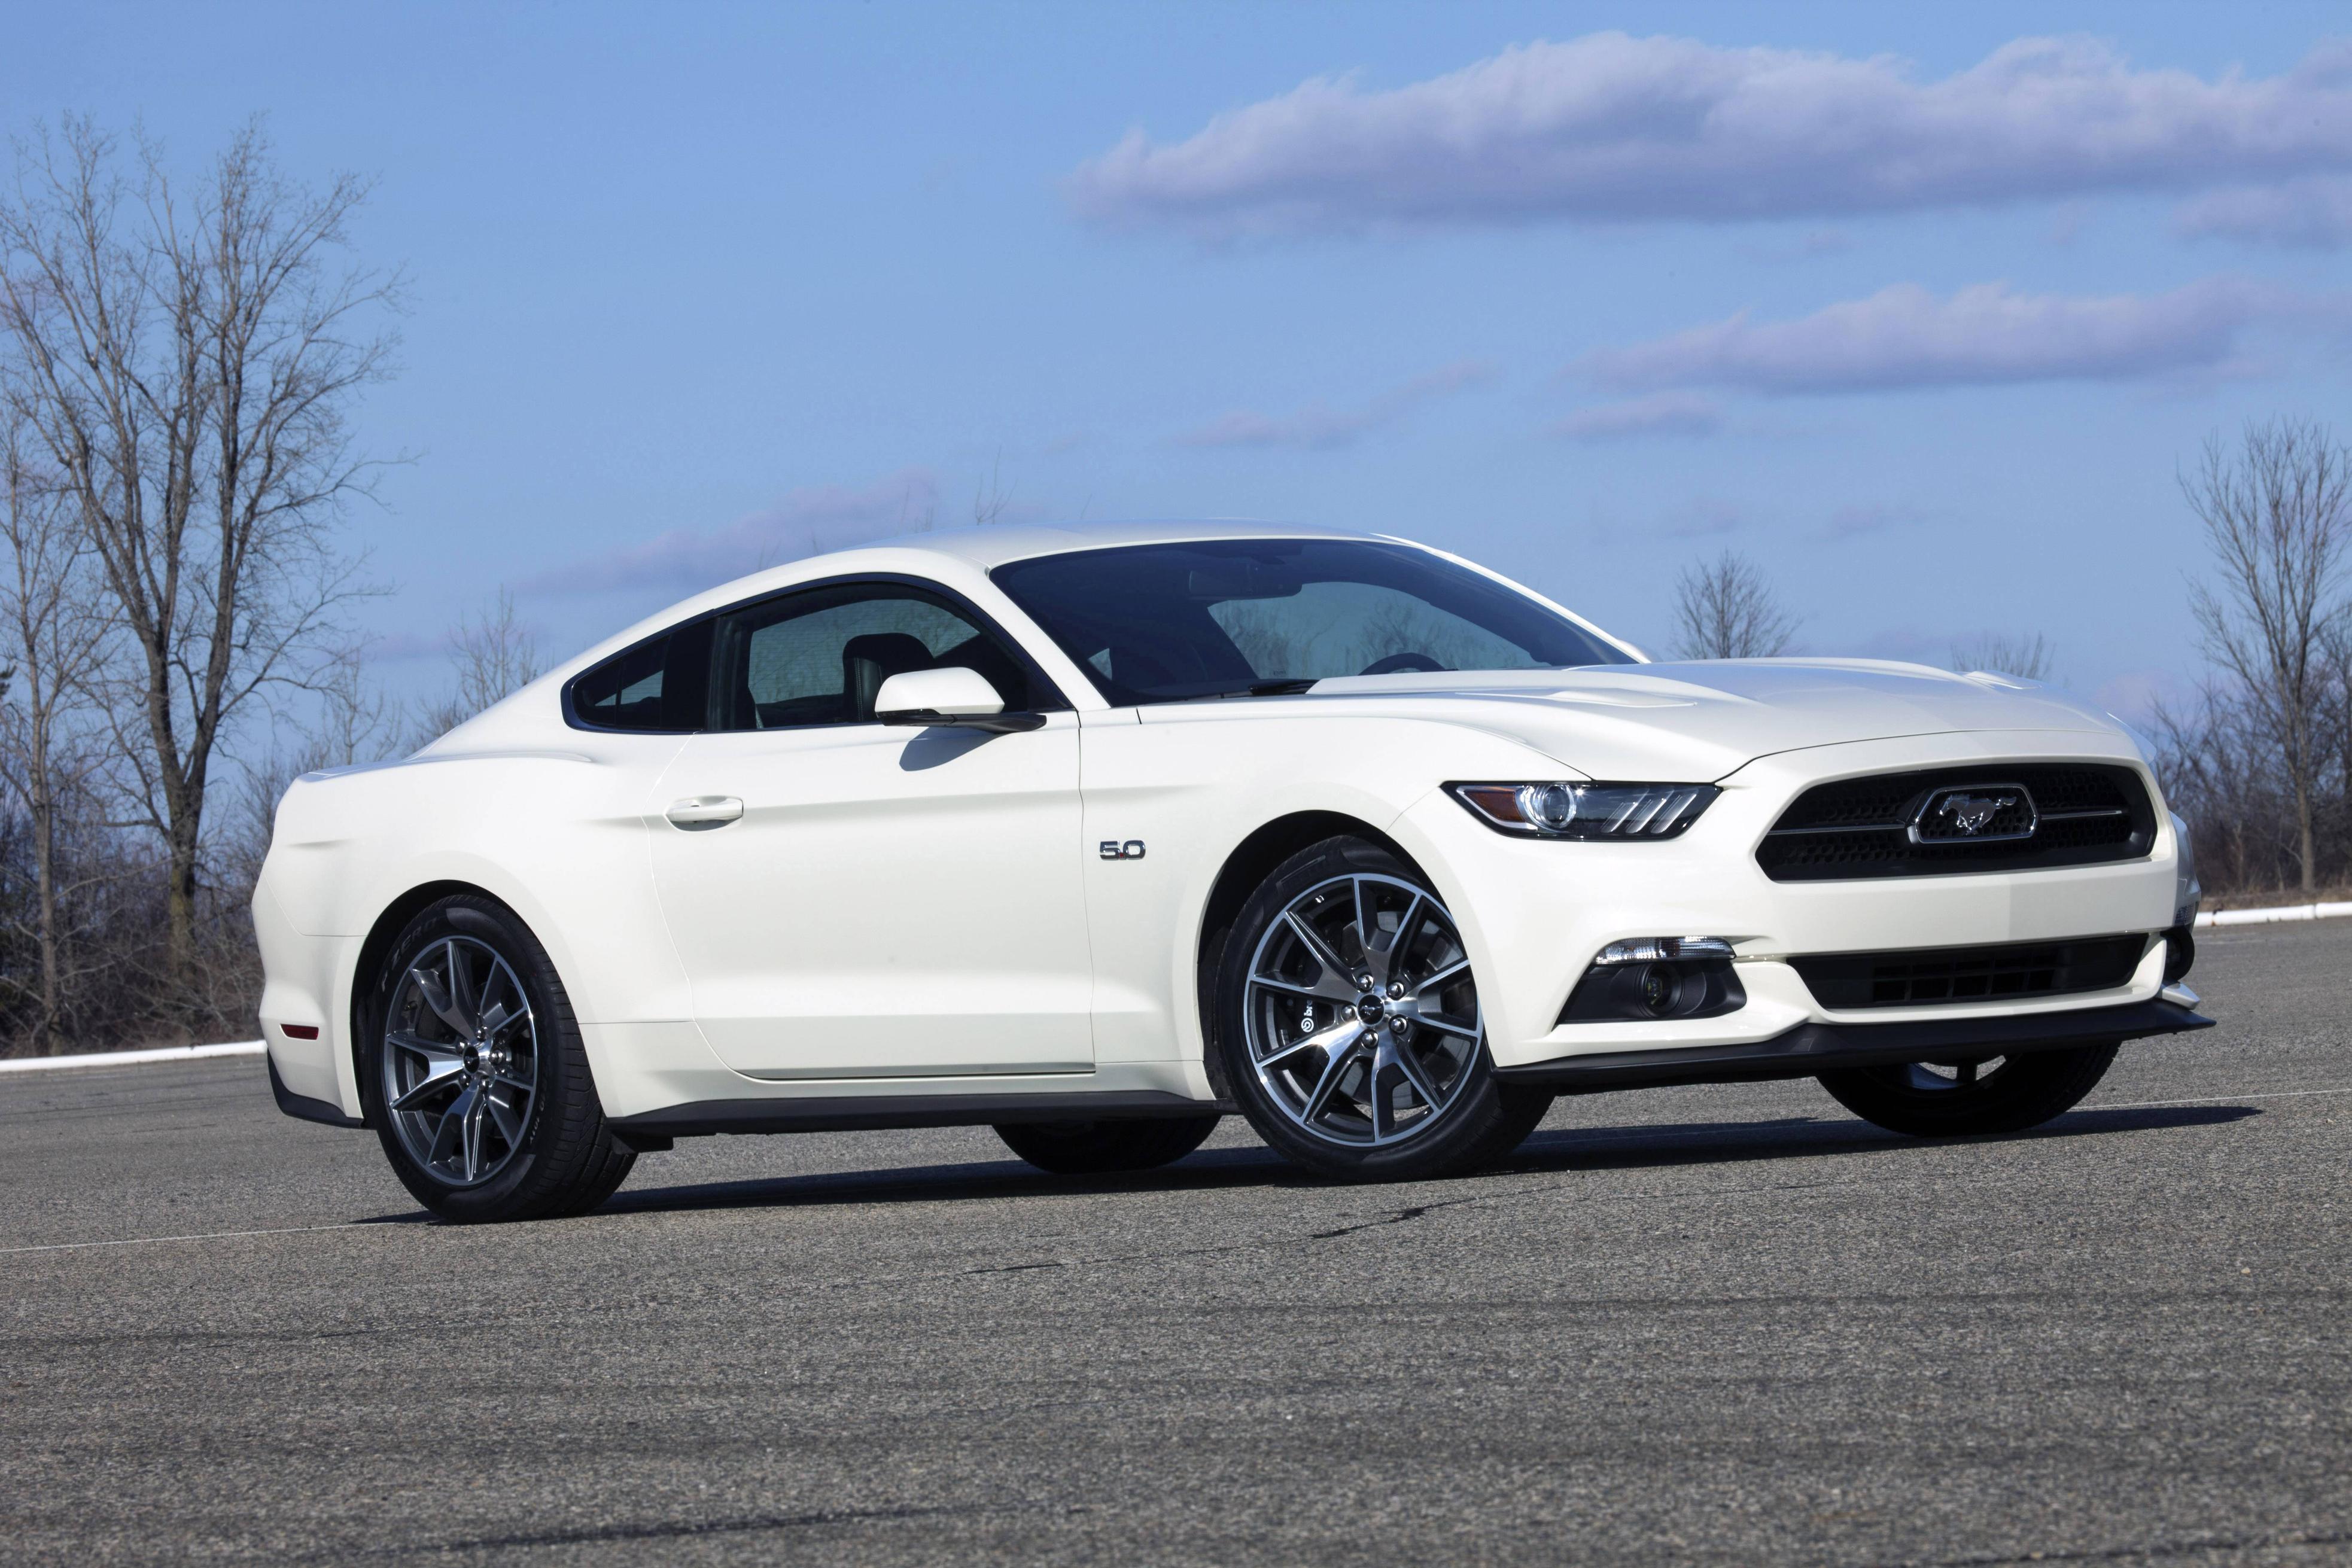 Mustang. TFLCar.com: Automotive News, Views and ReviewsThe